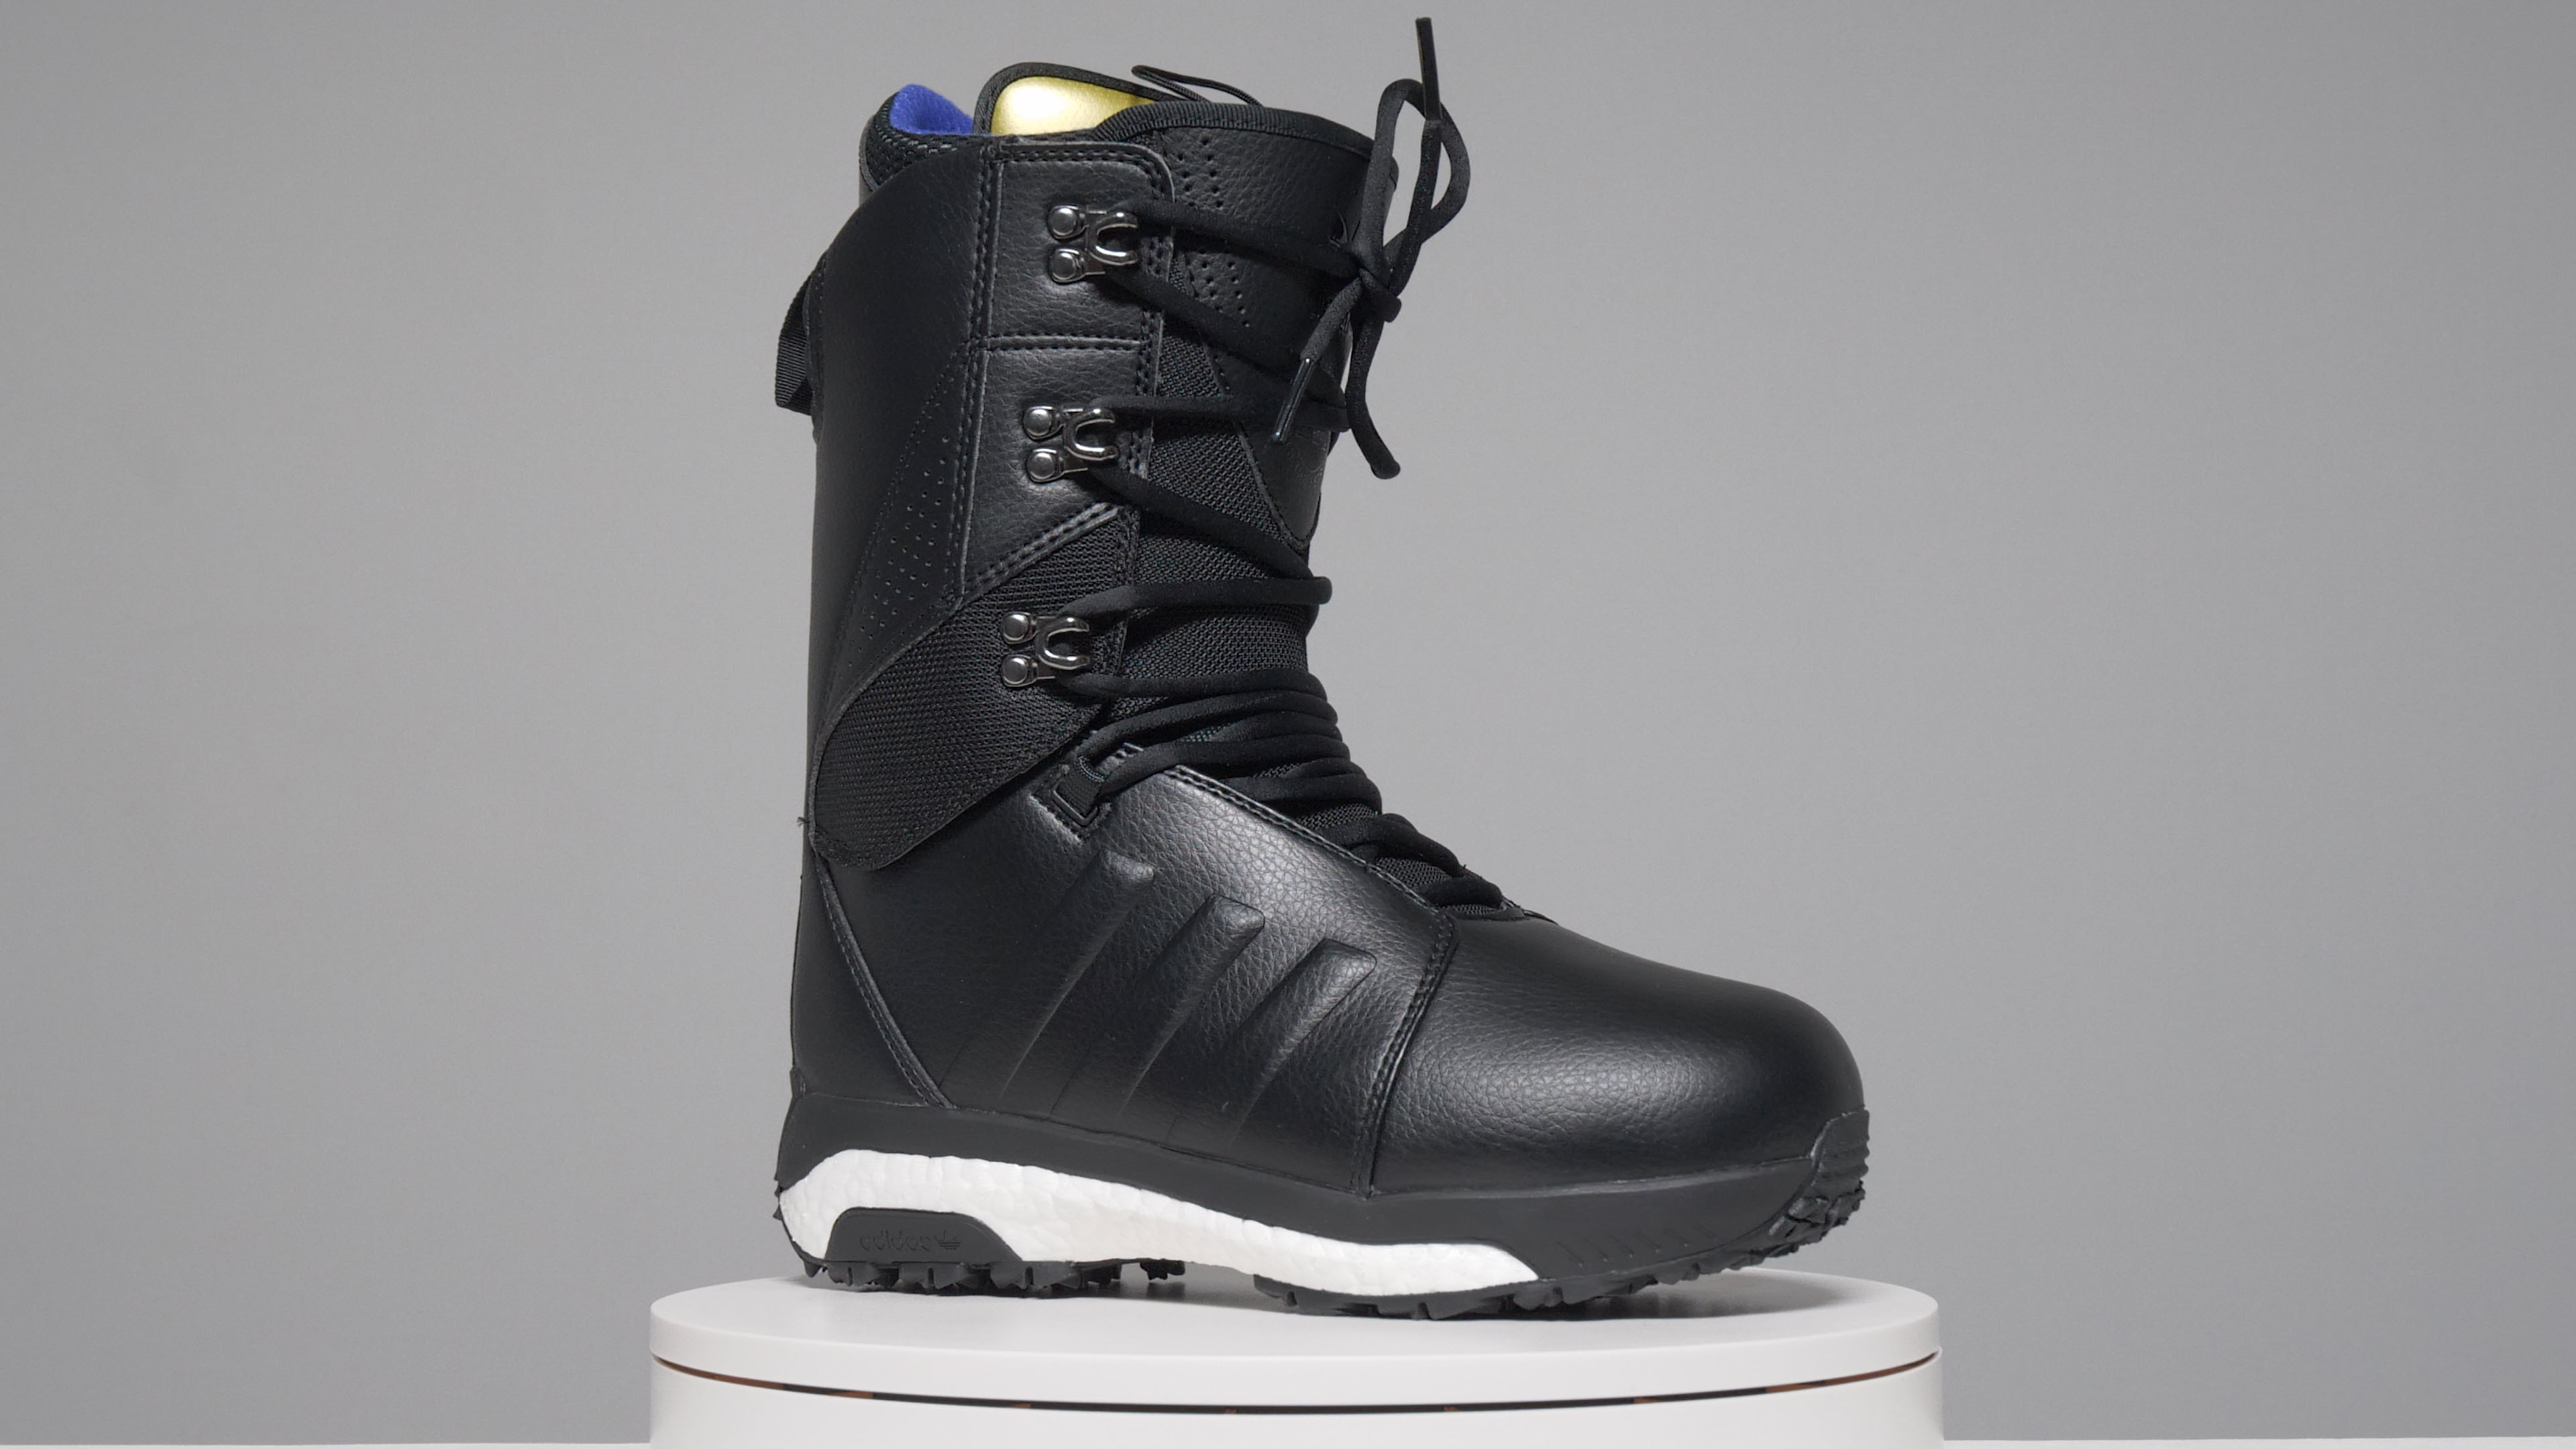 adidas 2021 snowboard boots